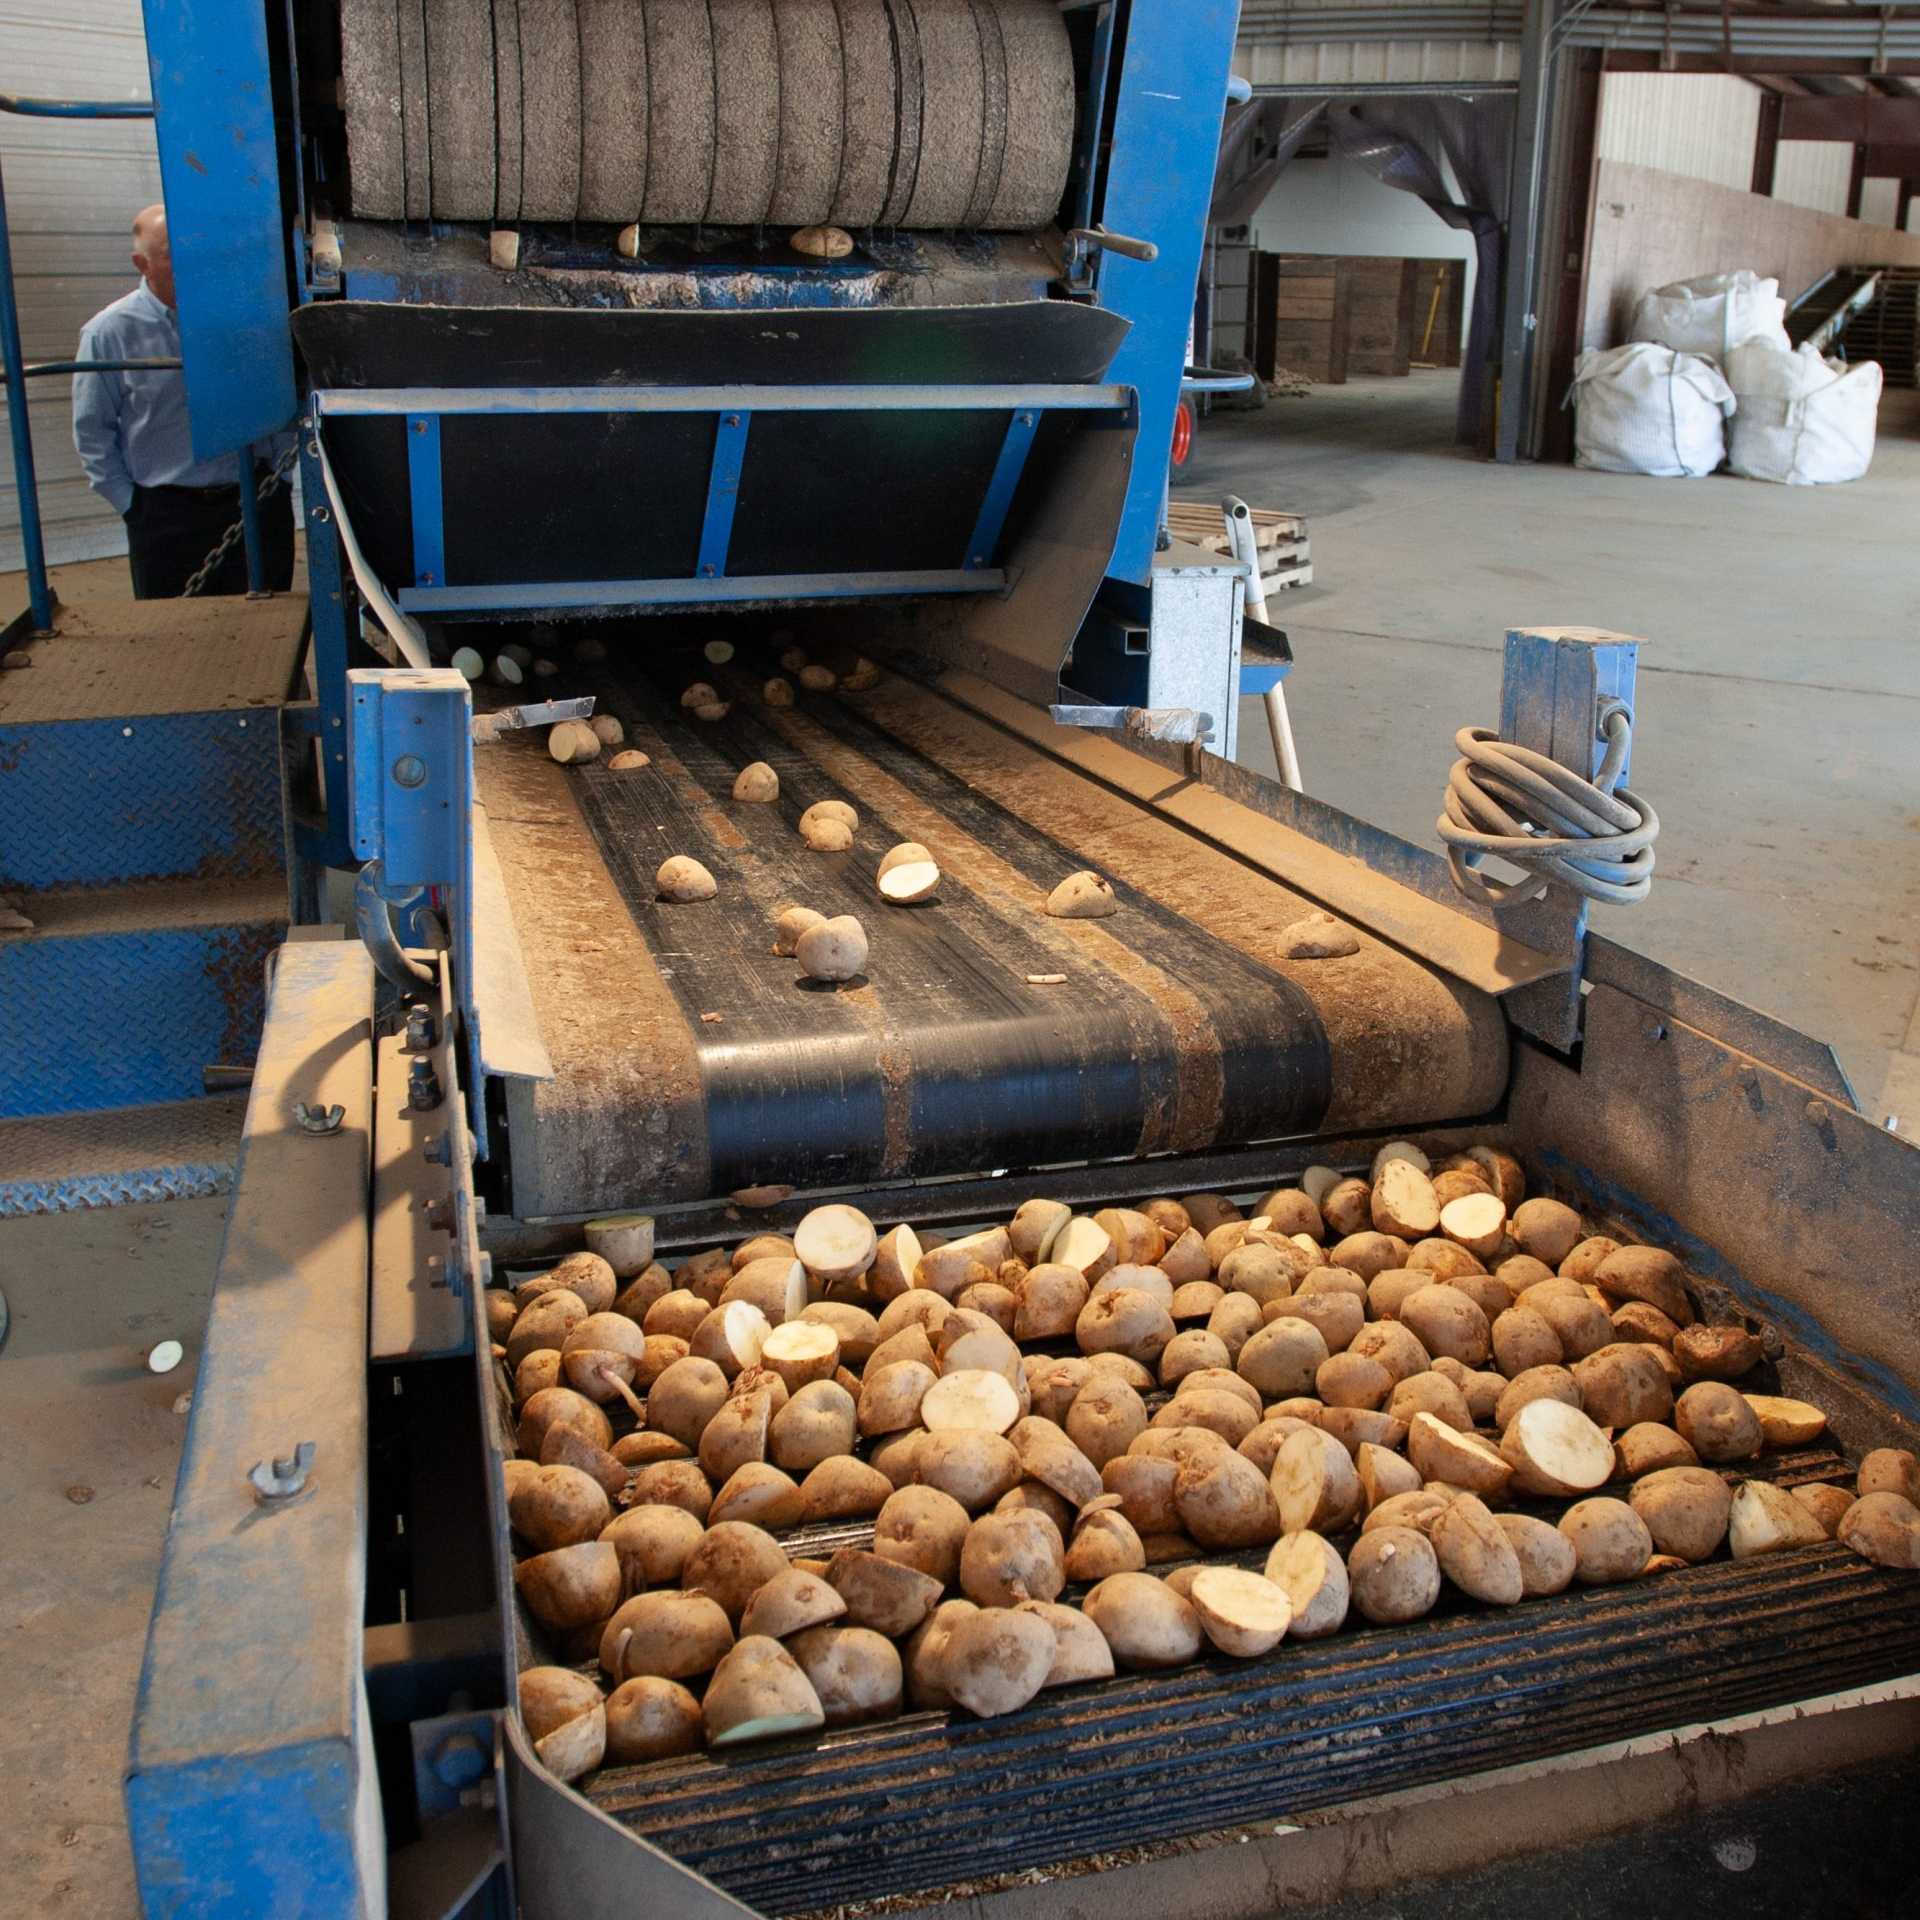 Conveyor Belt with Potatoes